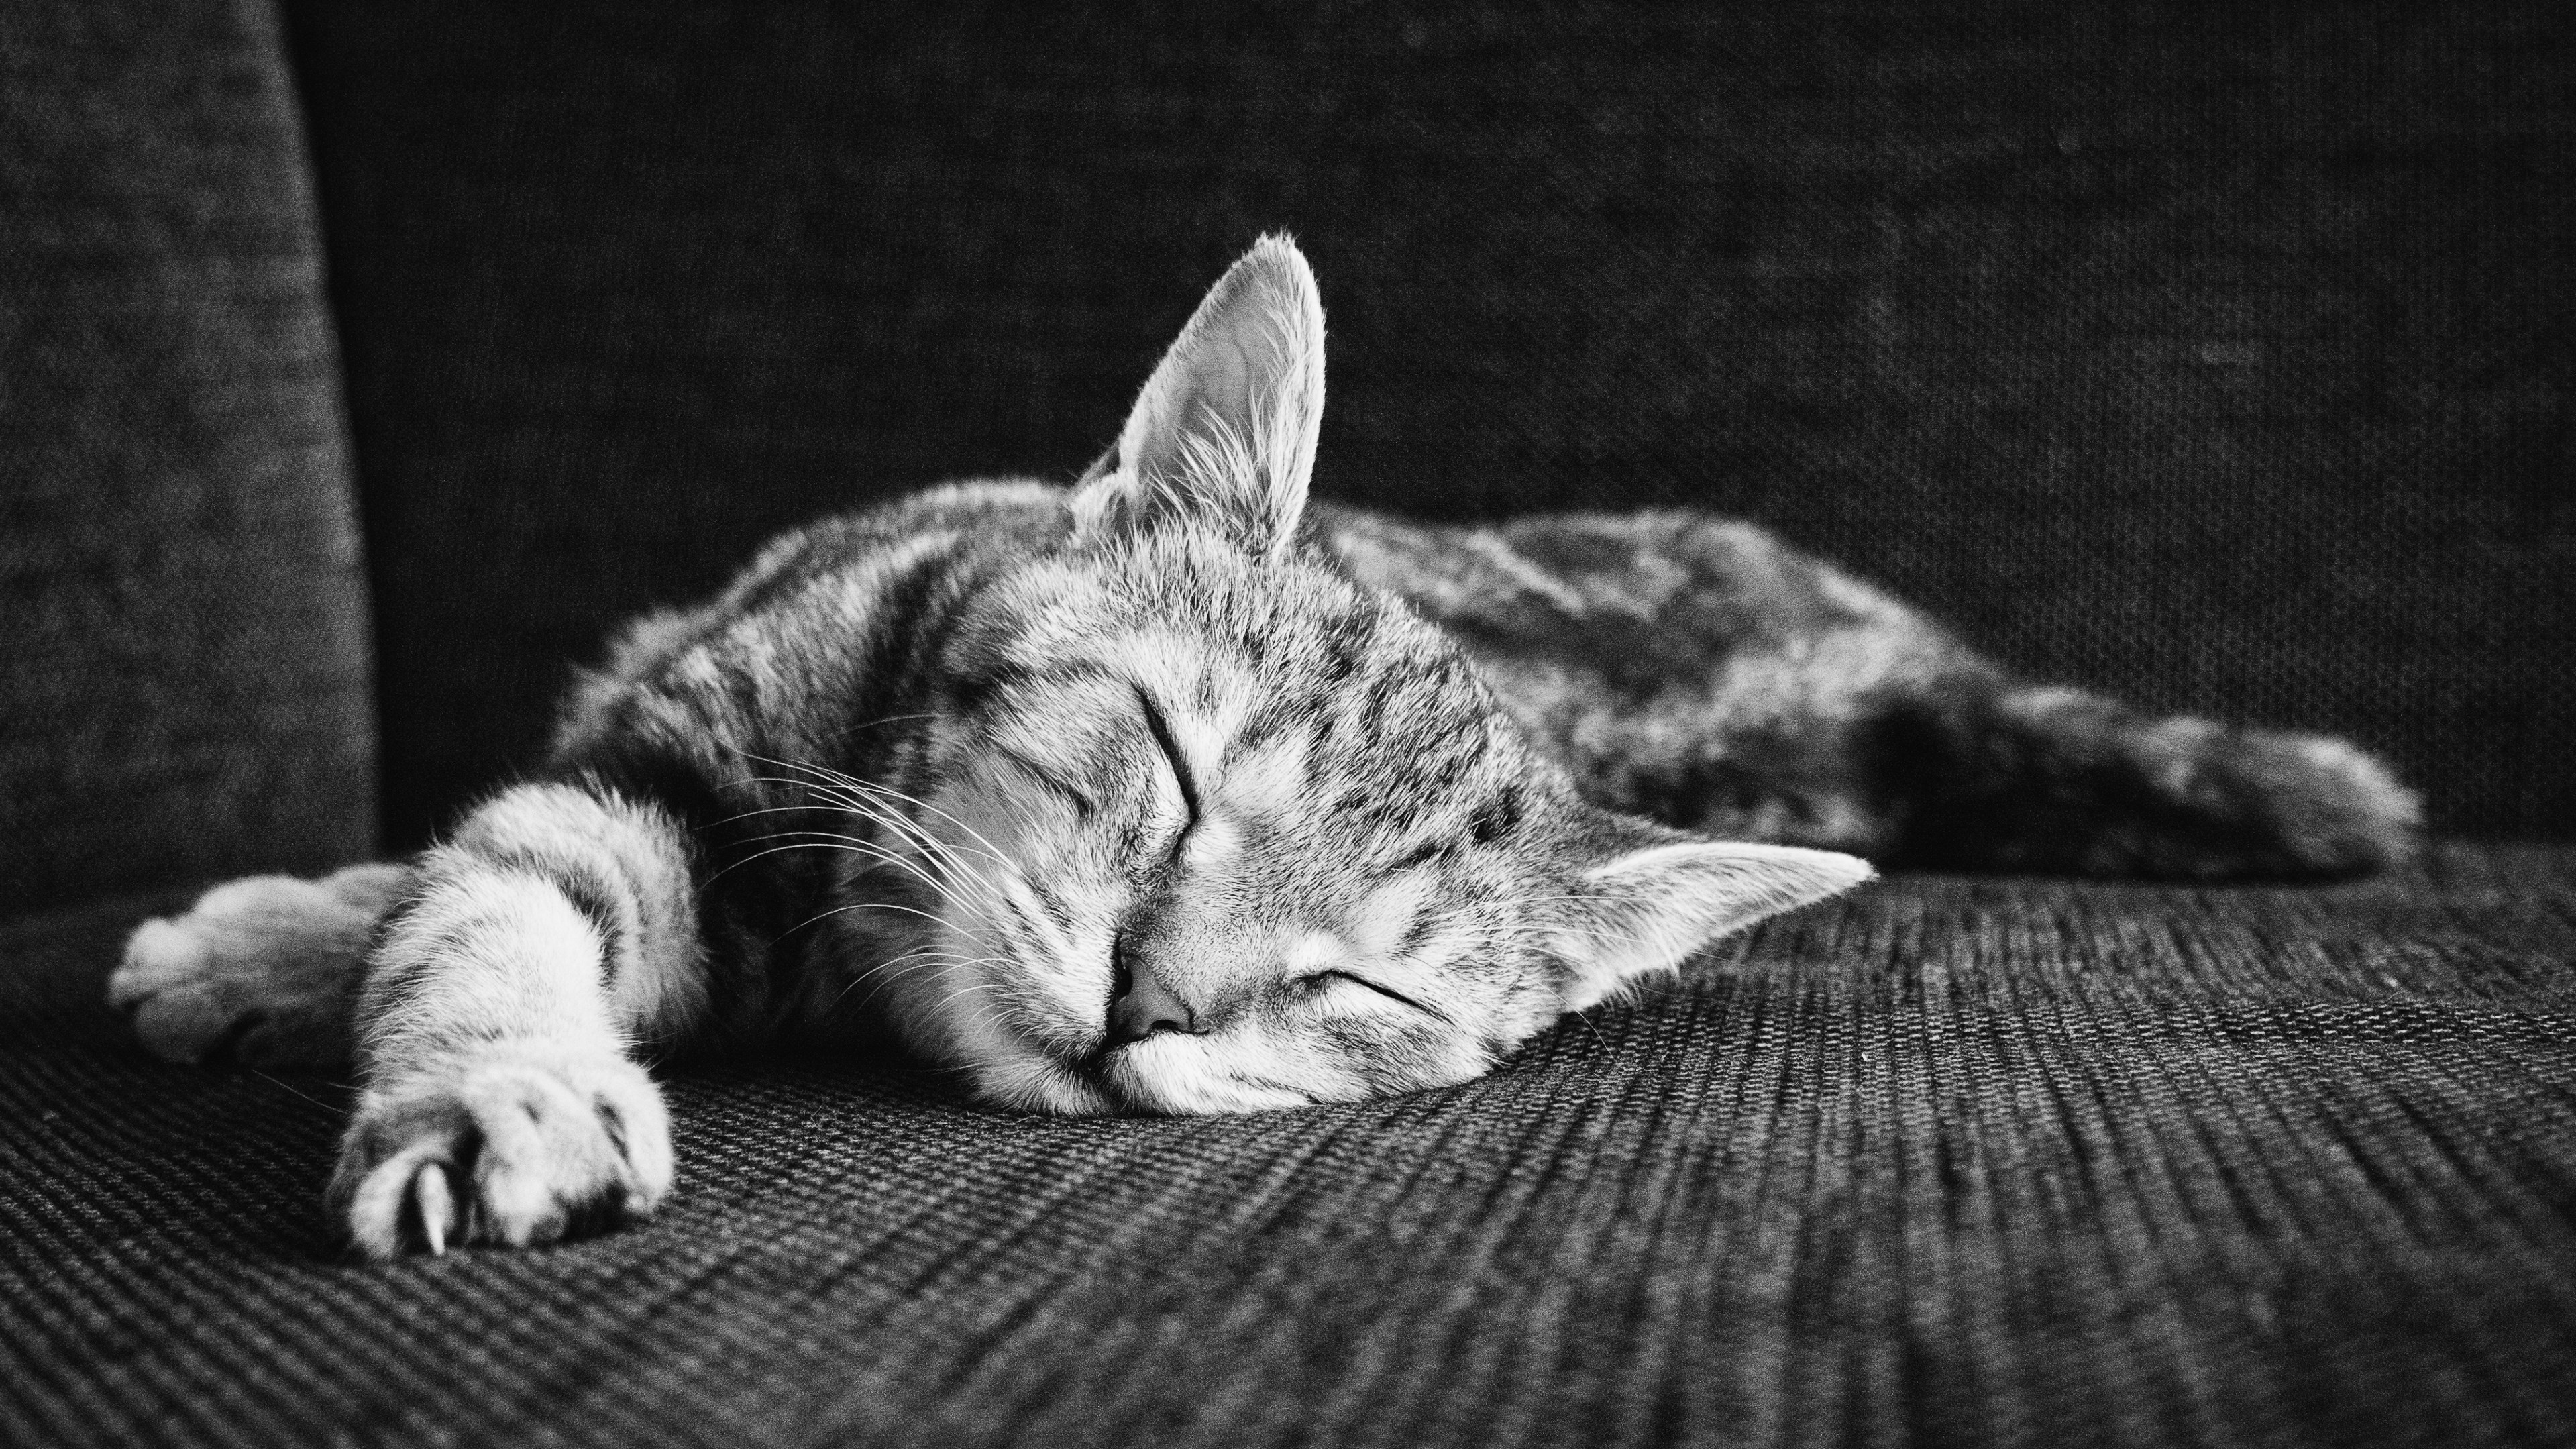 Zen of sleeping kitten wallpaper 3840x2160